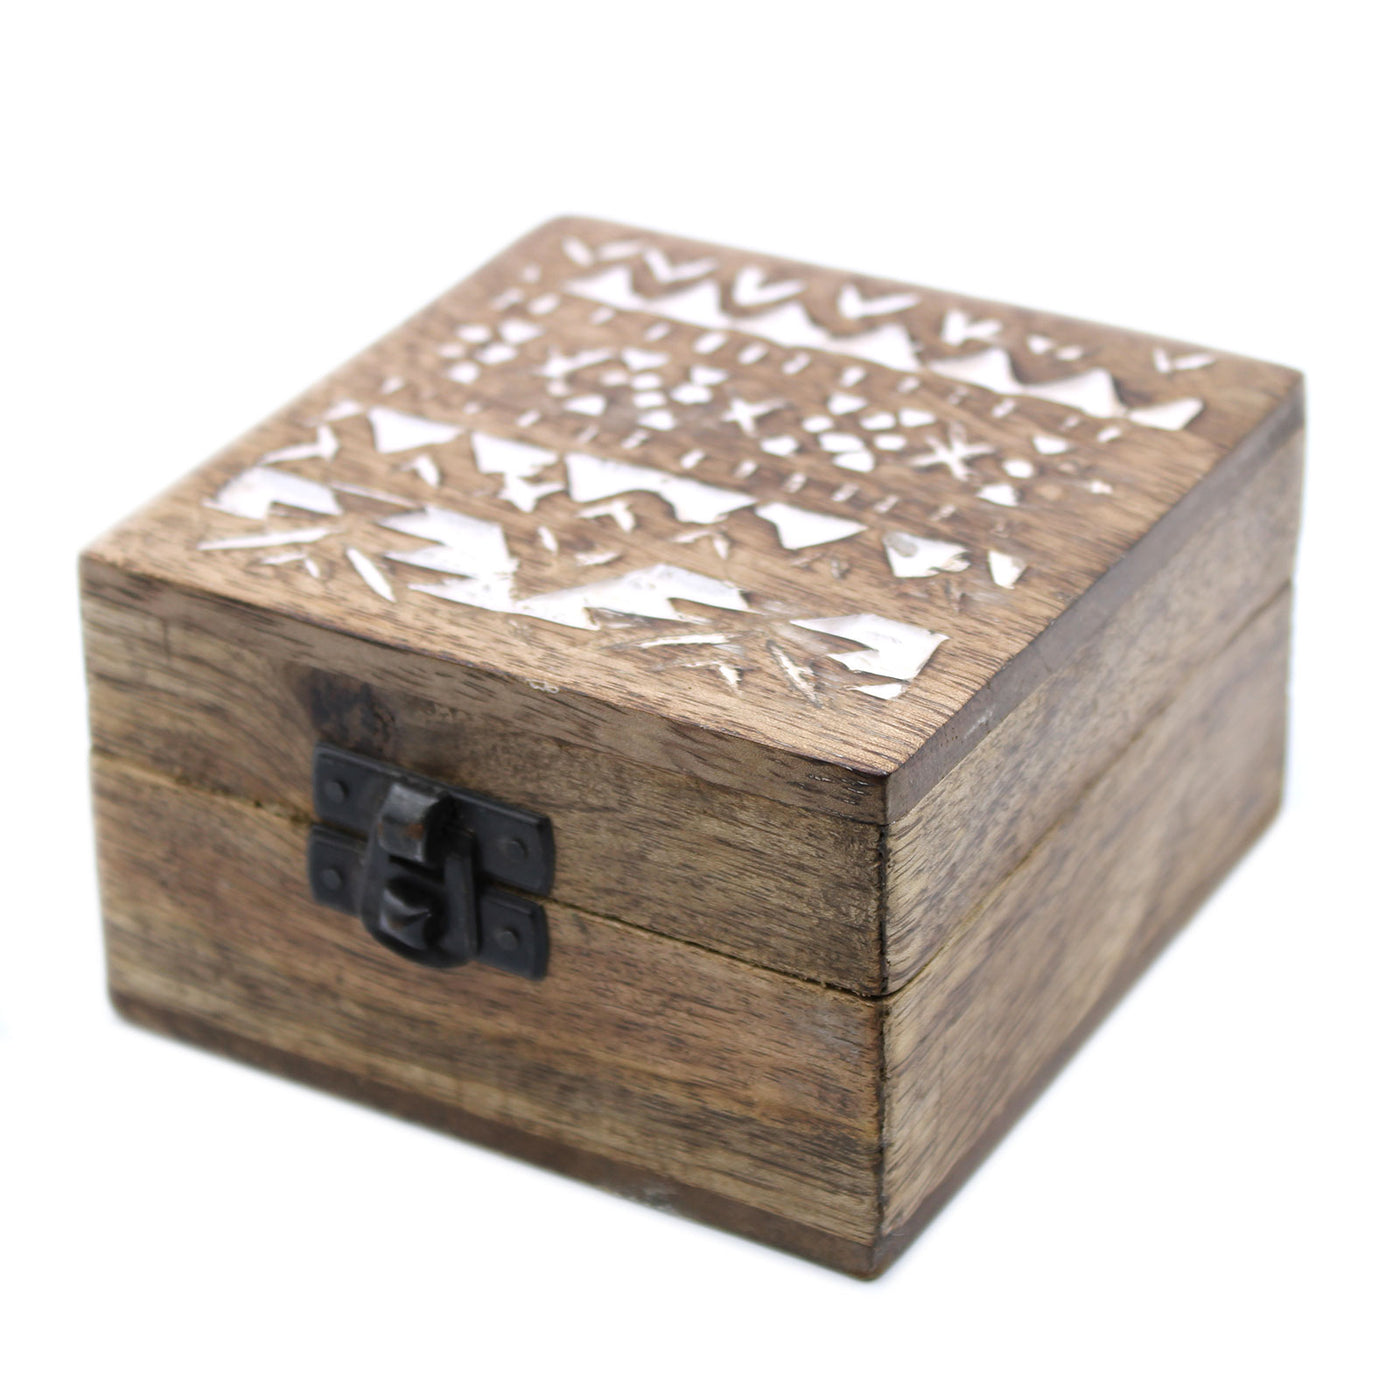 White Washed Wooden Storage Box - Slavic Design 4 x 4 Inch. 